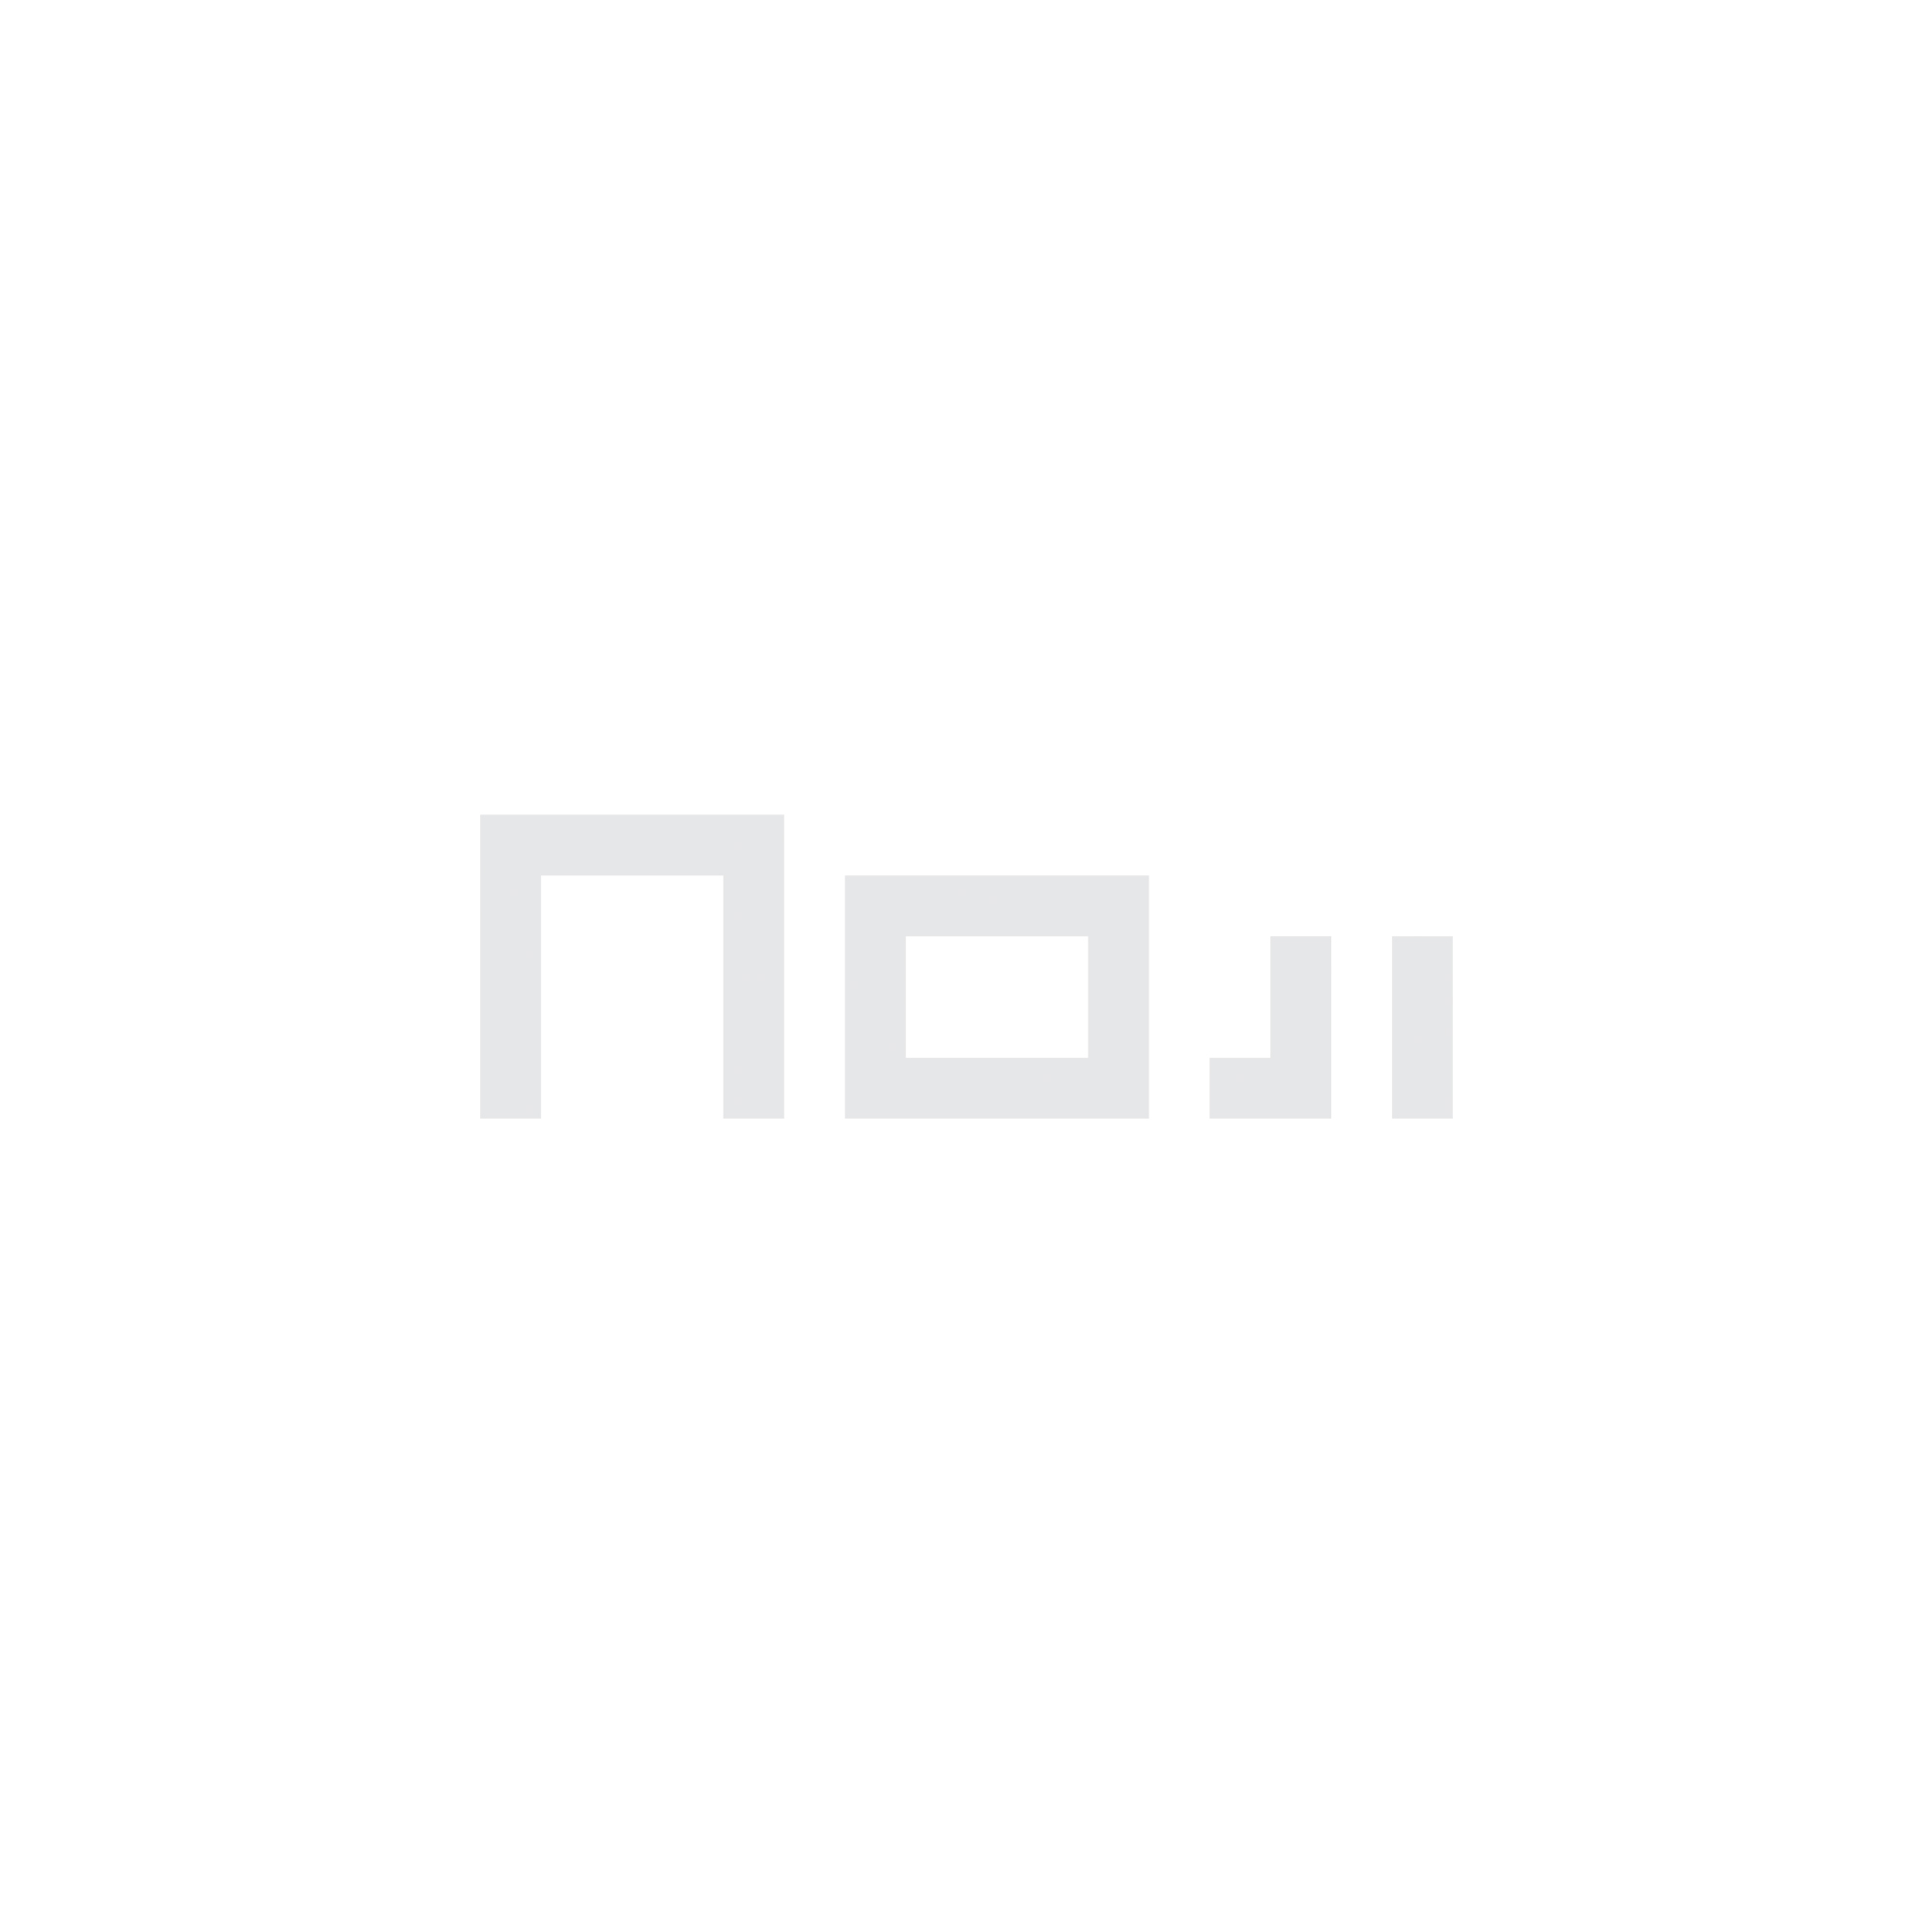 Cover image: 'Noji Architecture' Branding